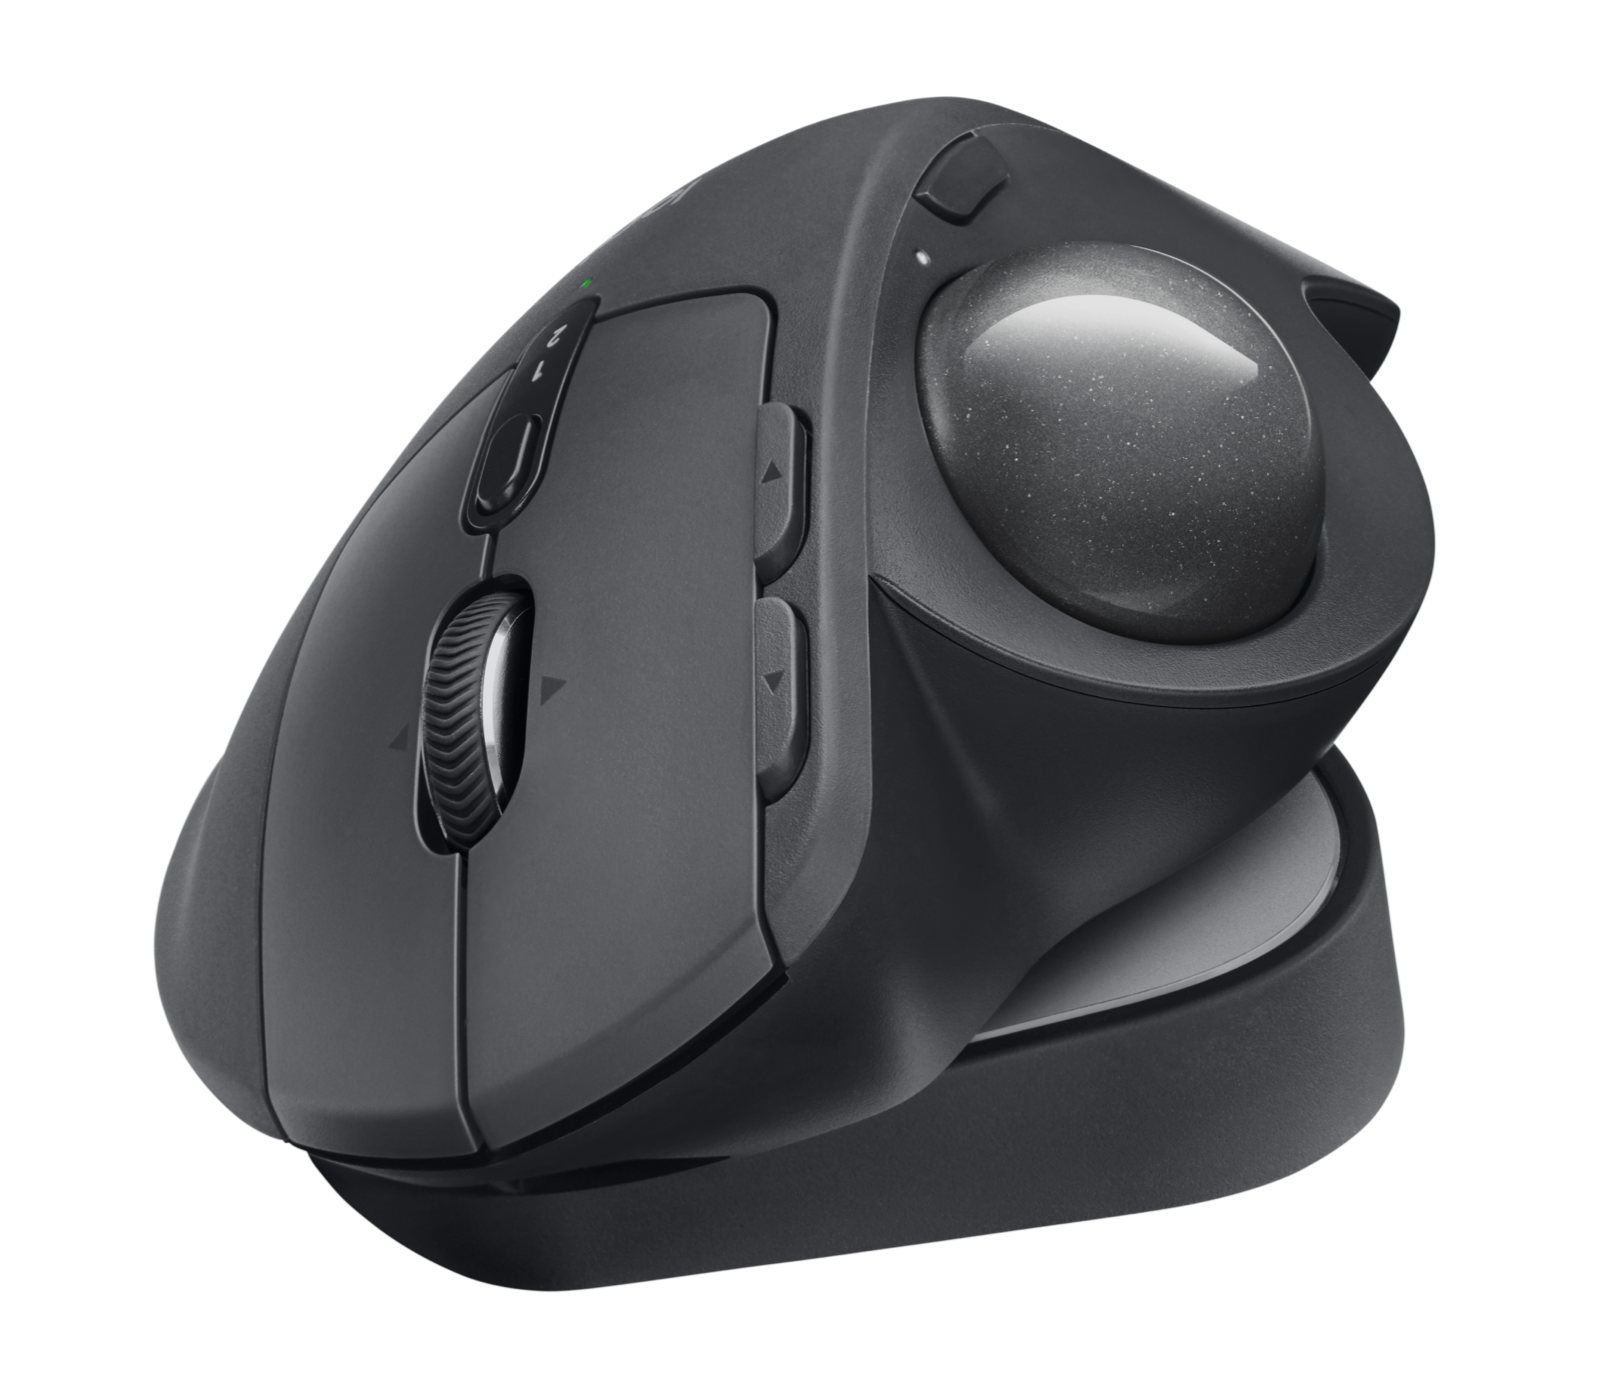  Logitech Lift Vertical Ergonomic Mouse, Wireless, Bluetooth or Logi  Bolt USB receiver, Quiet clicks, 4 buttons, compatible with  Windows/macOS/iPadOS, Laptop, PC - Graphite : Electronics